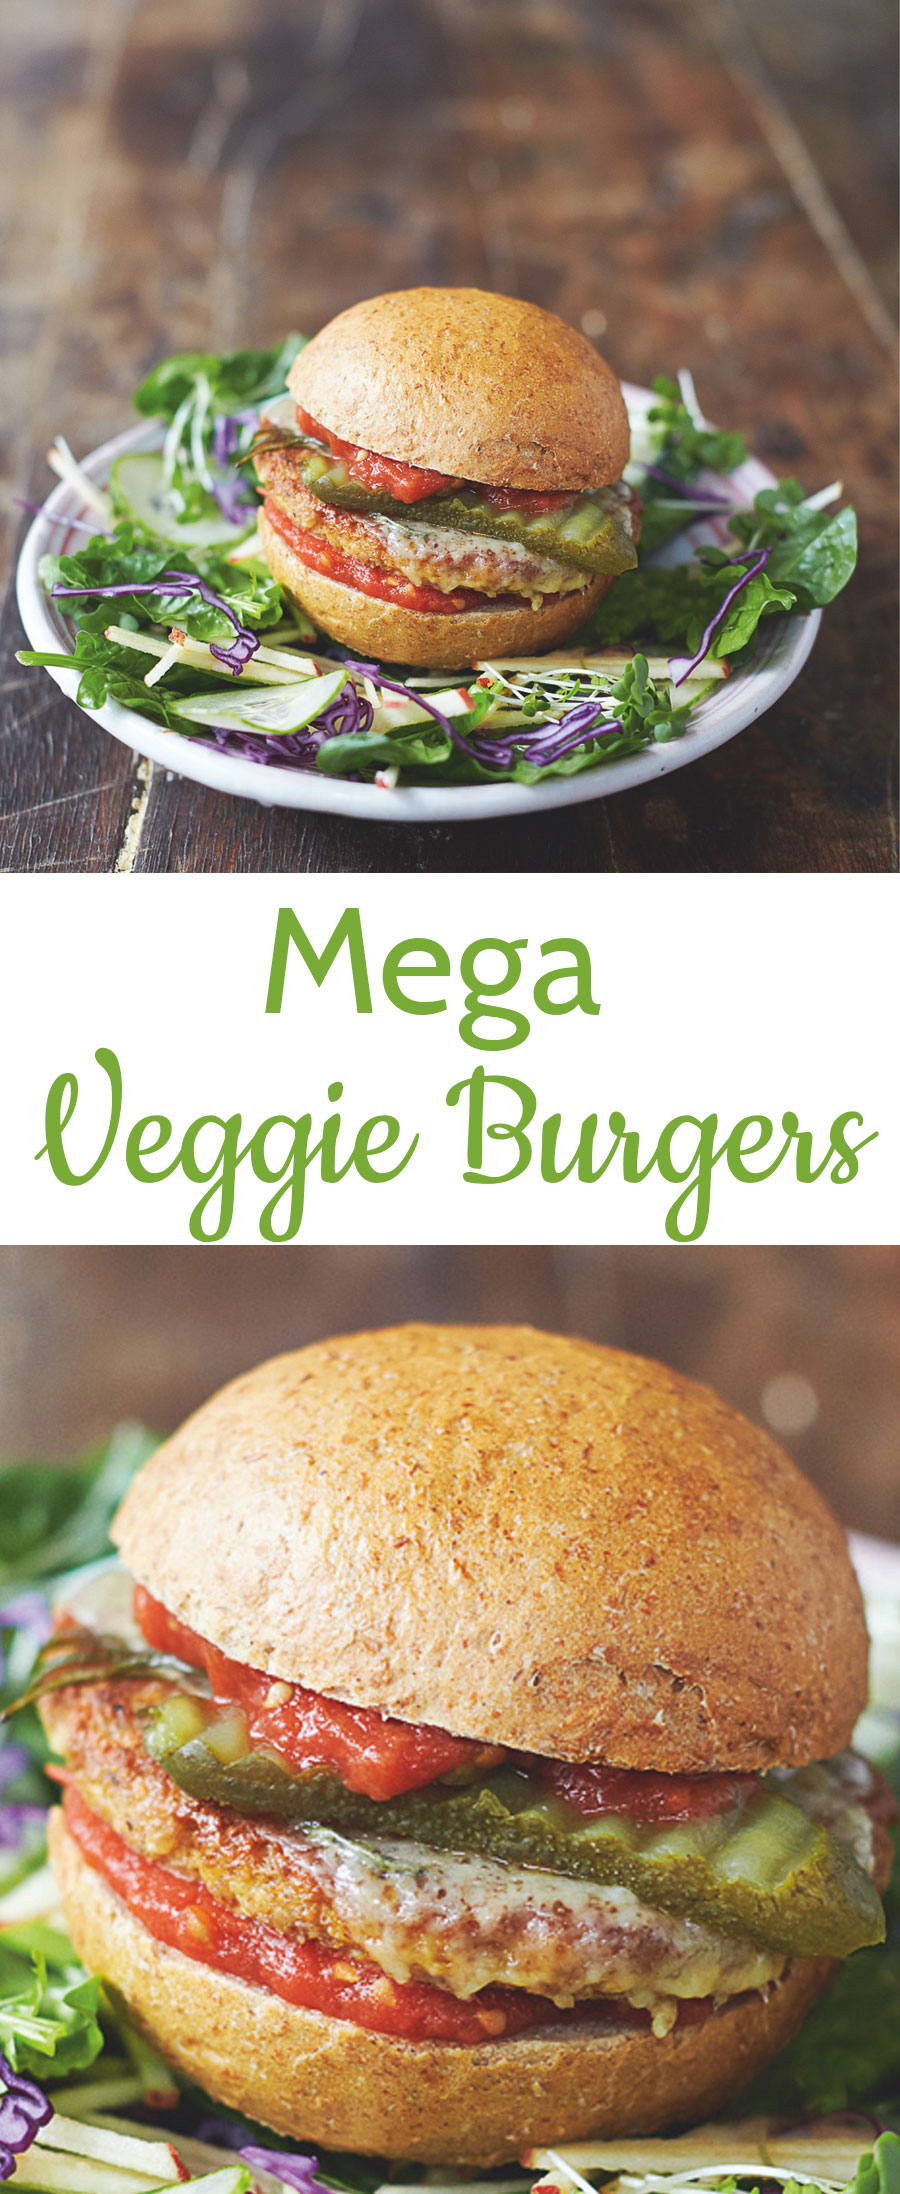 Healthy Mega Veggie Burgers from Jamie Oliver's book, Everyday Super Food